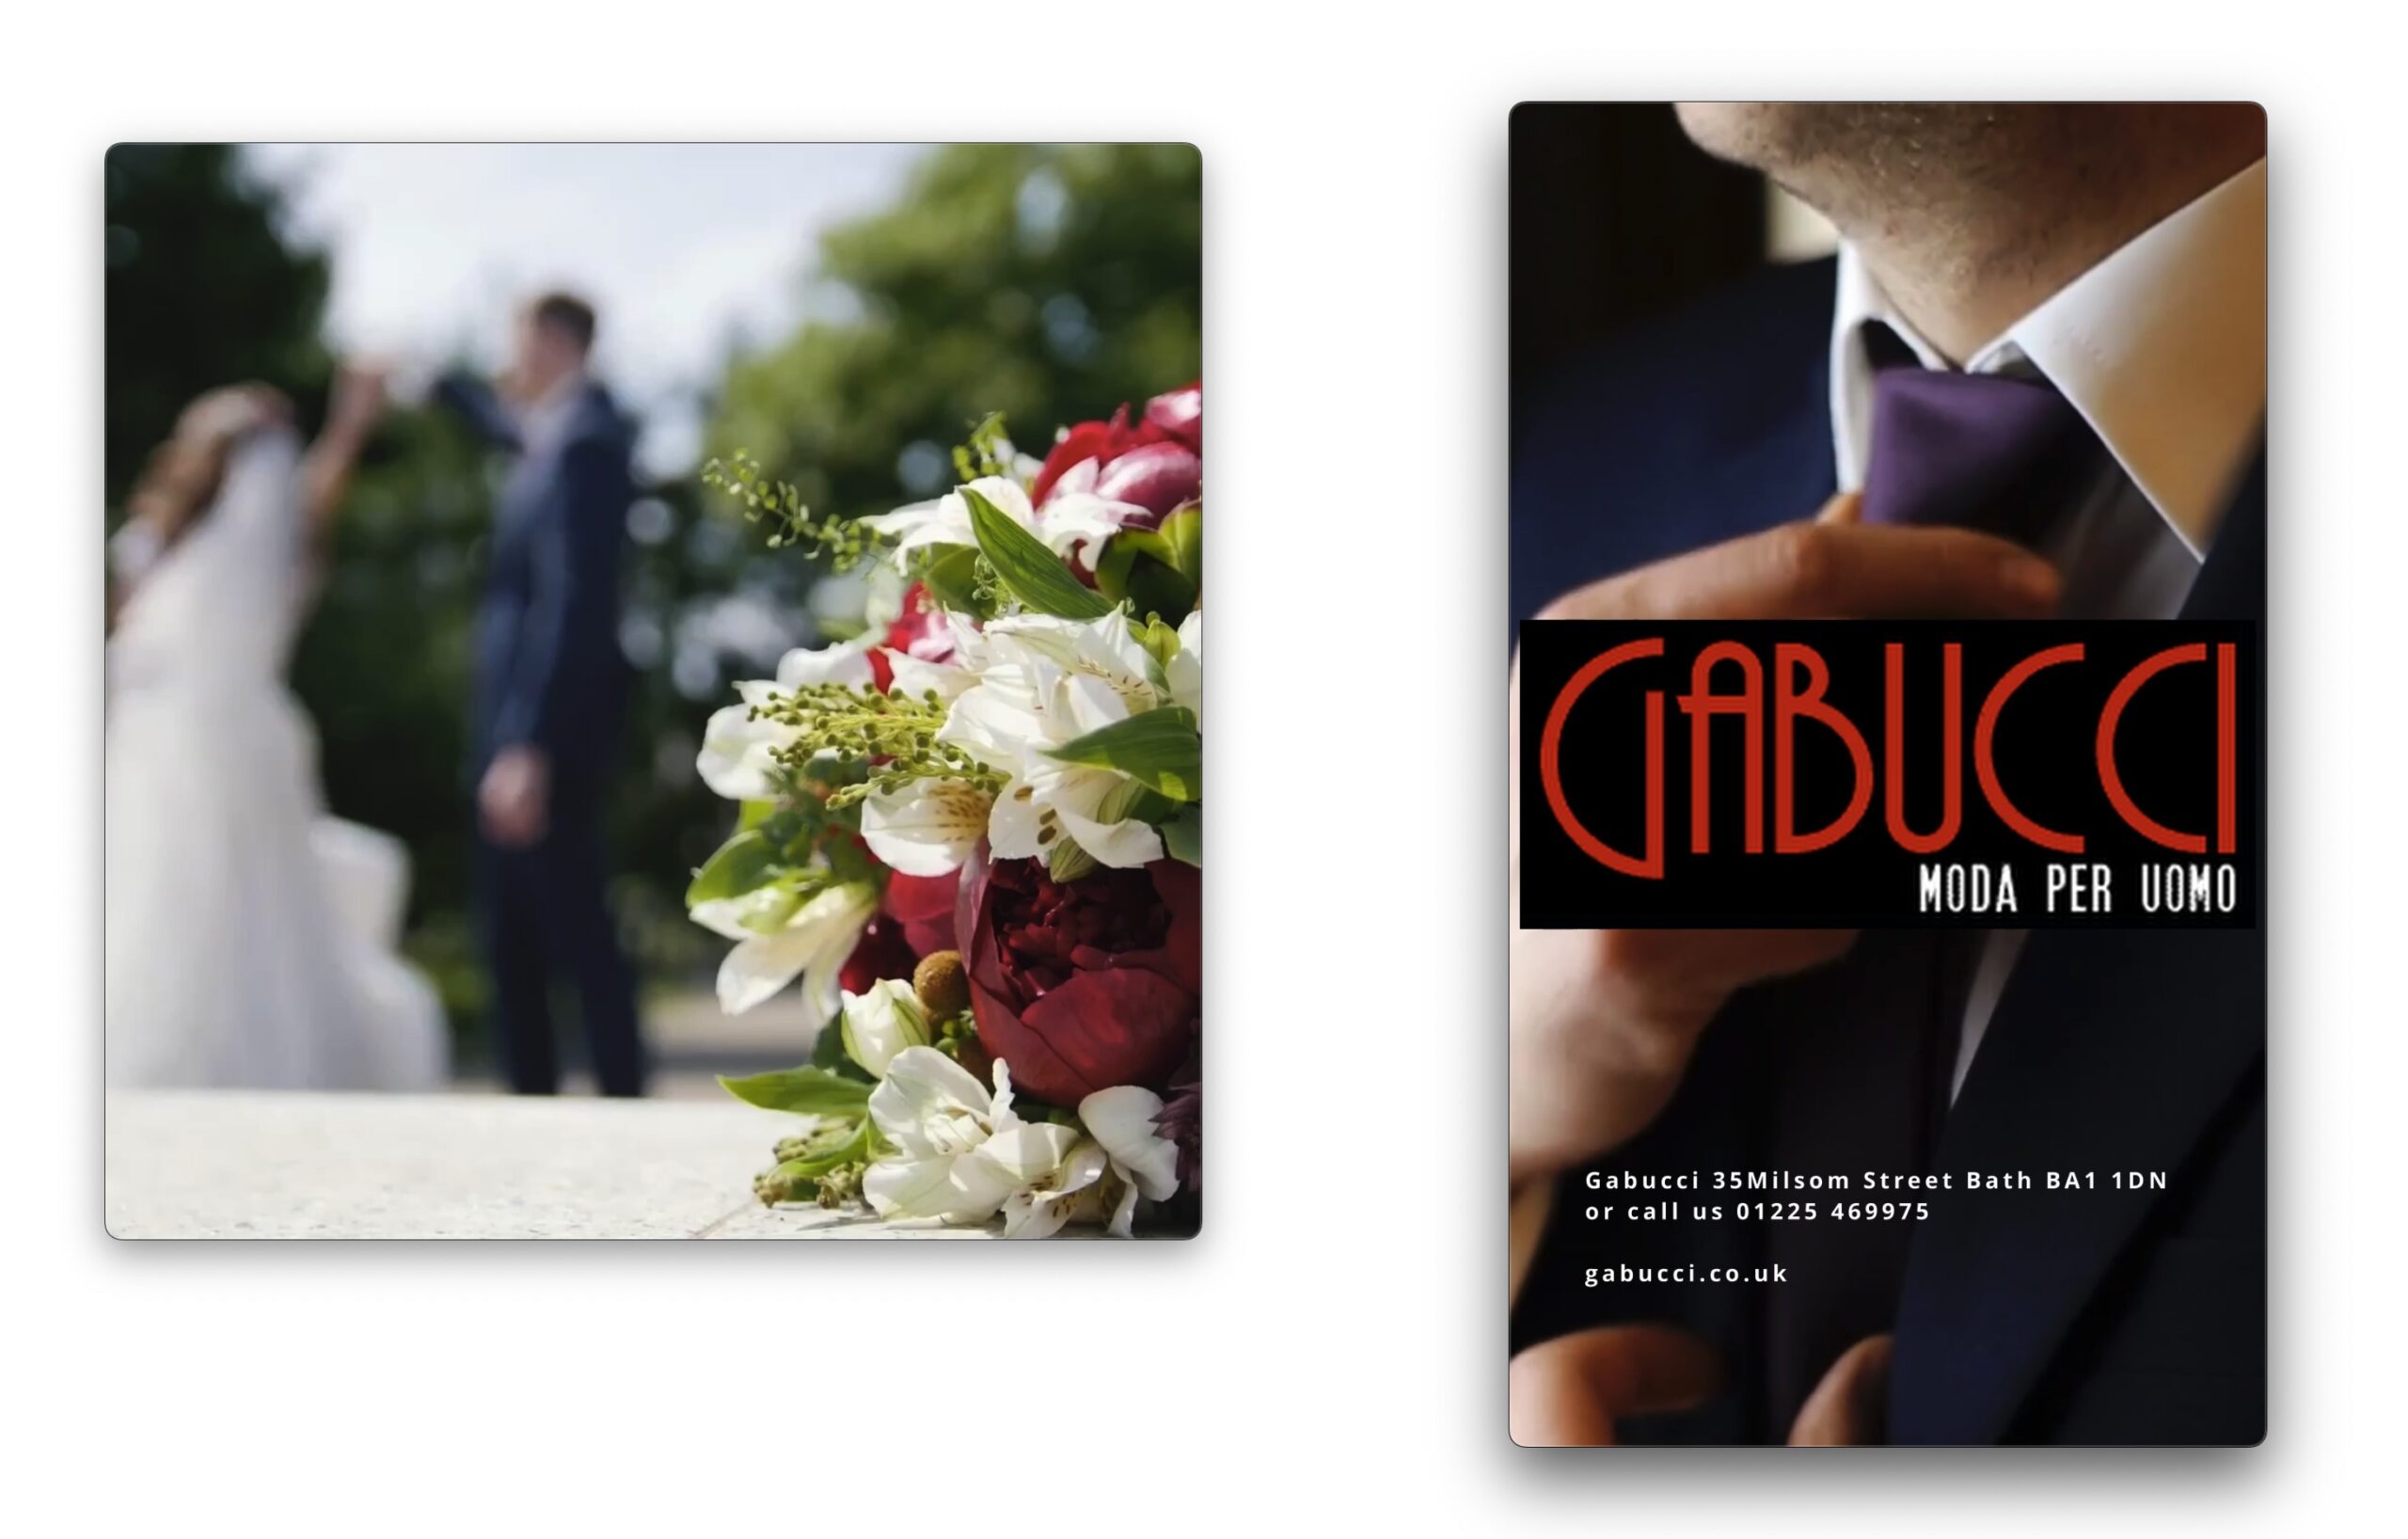 Gabucci social media screenshots showing latest two wedding attire Instagram and YouTube clips